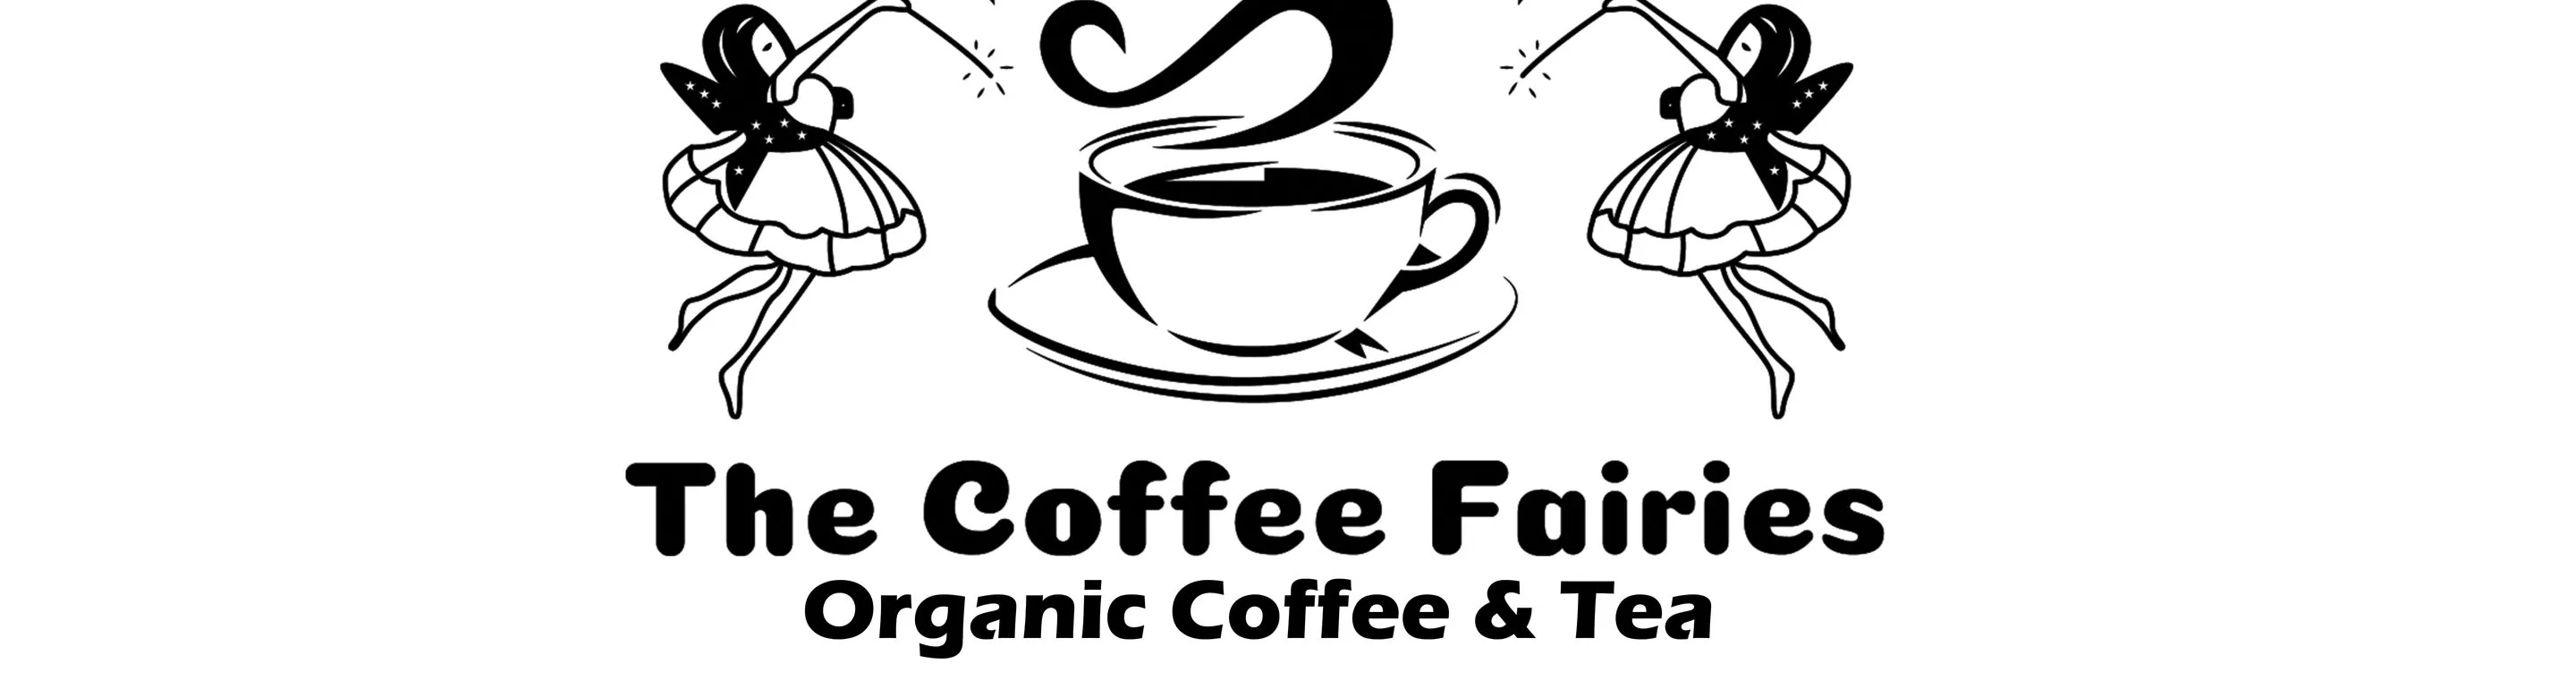 The Coffee Fairies